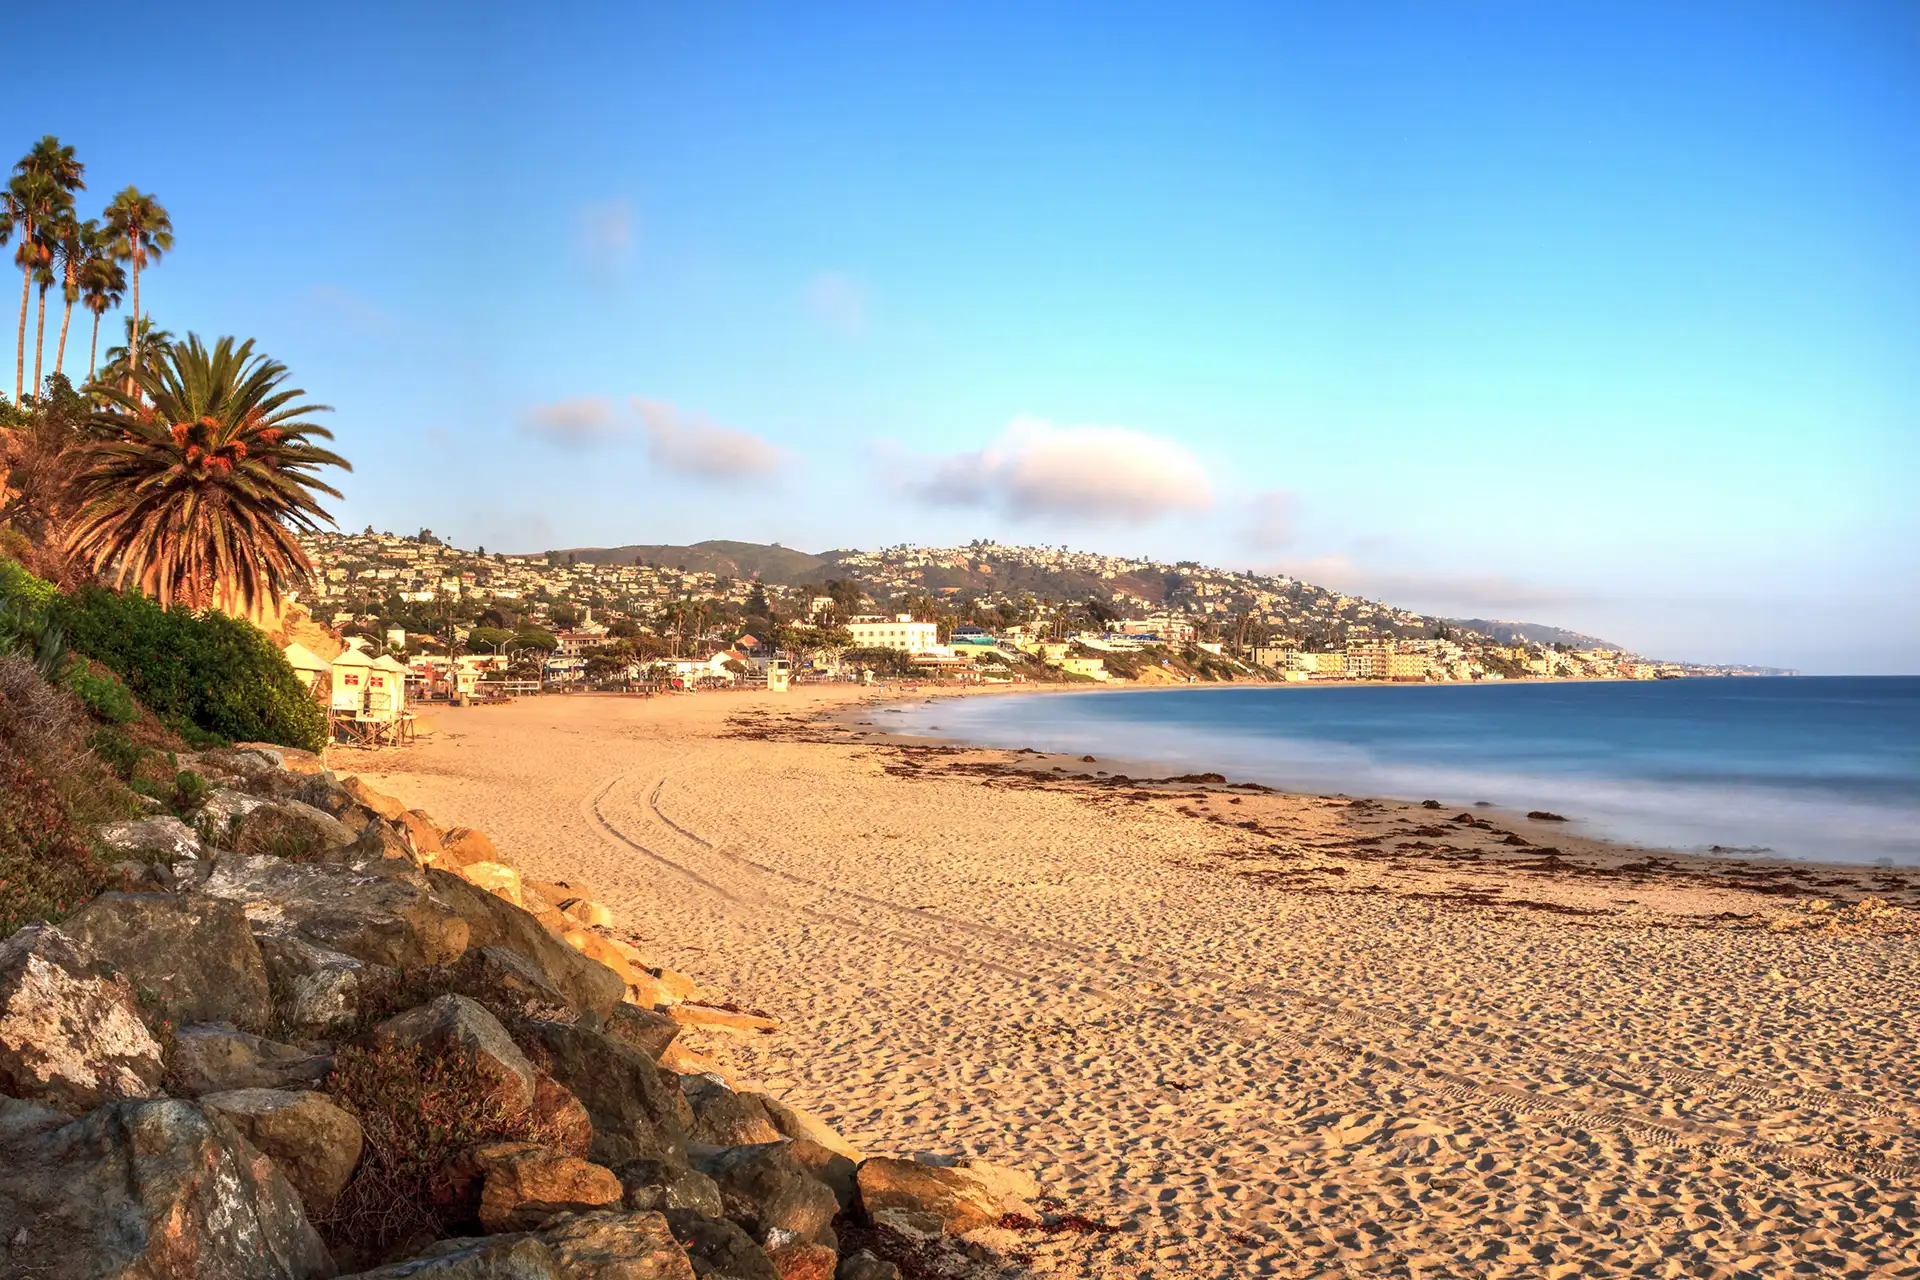 Golden Hour over the ocean at Main Beach in Laguna Beach, California; Courtesy of LagunaticPhoto/Shutterstock